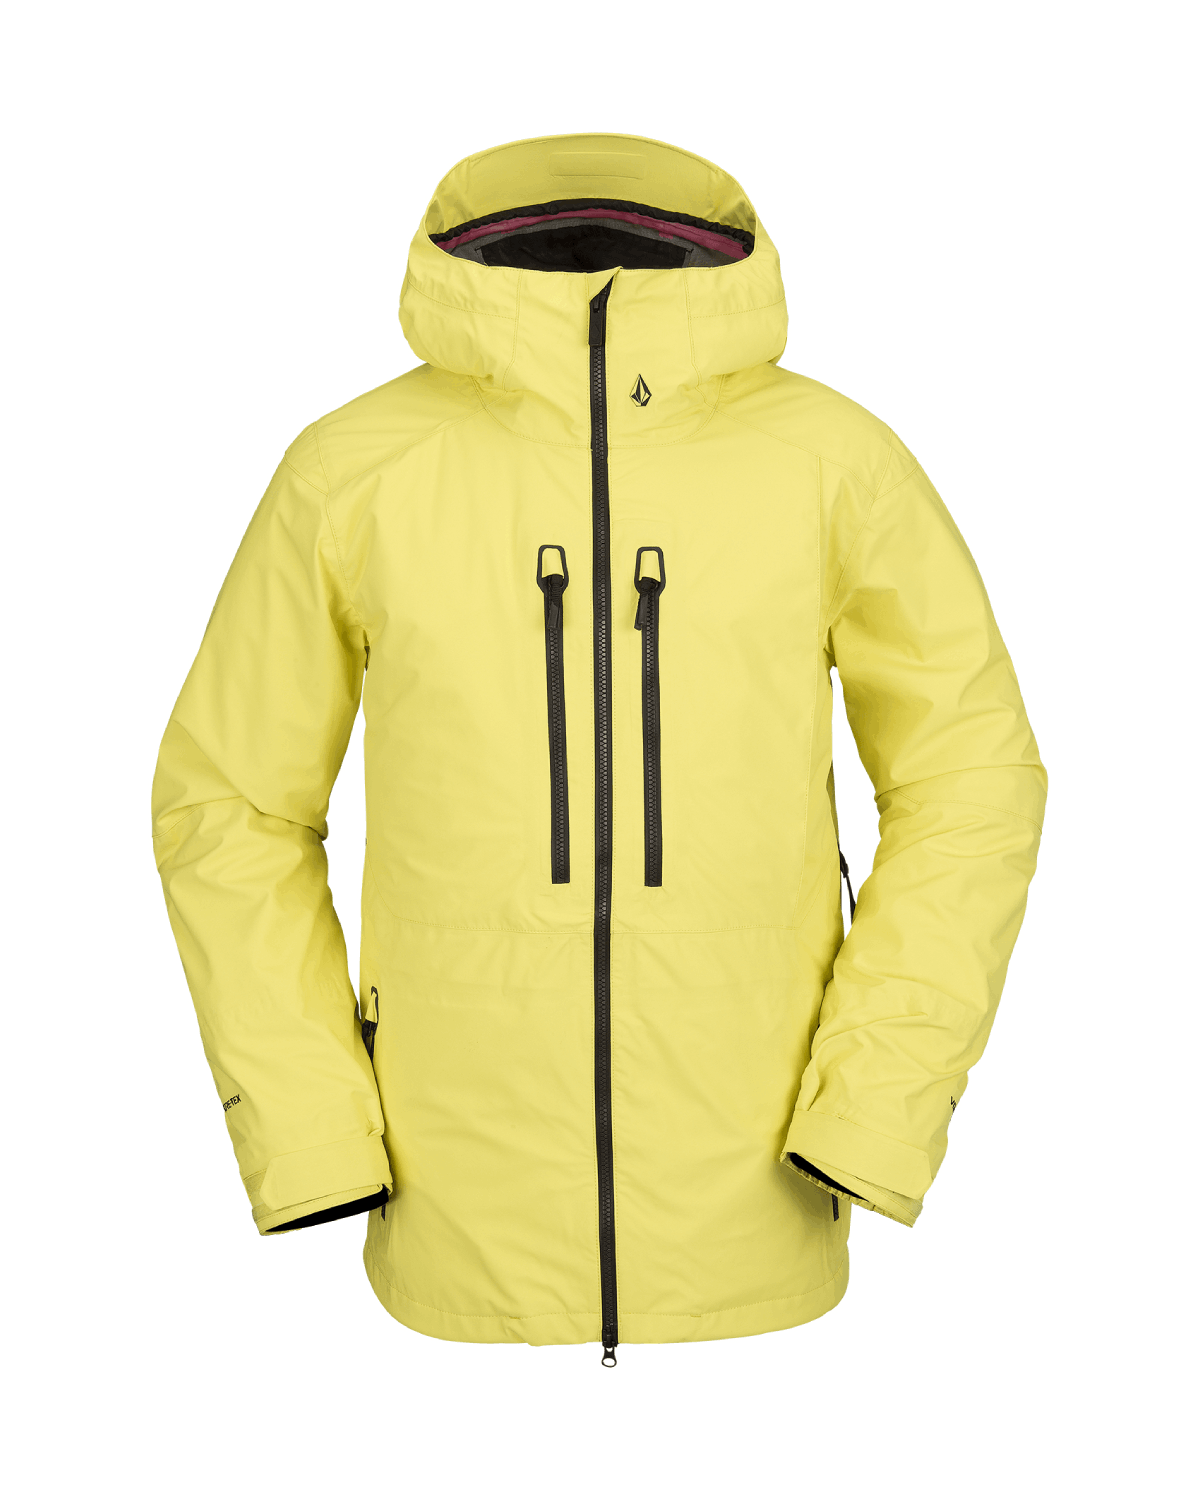 Volcom Guide GORE-TEX Ski Jacket in Citron